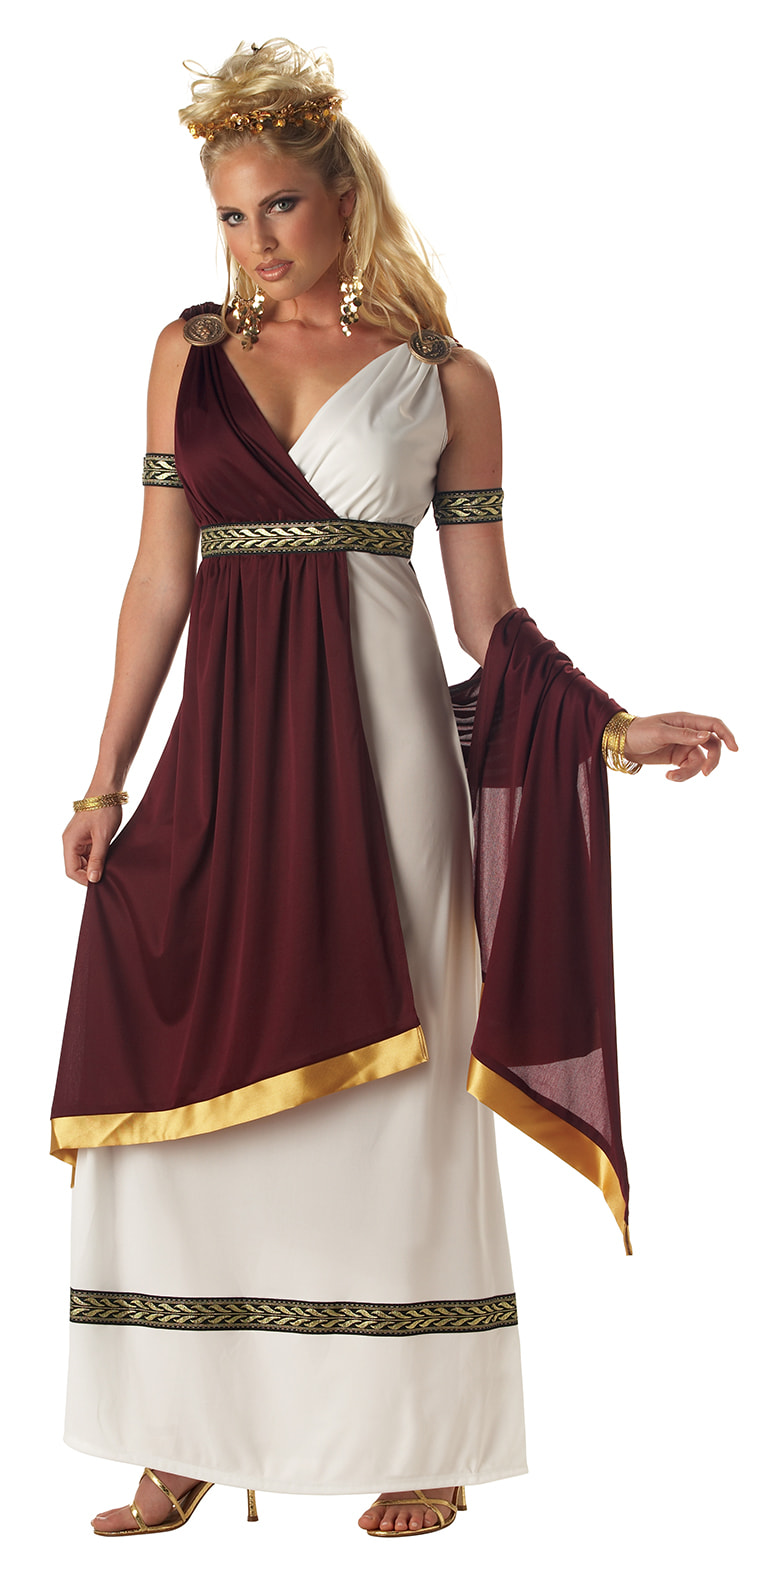 Одежда римских женщин